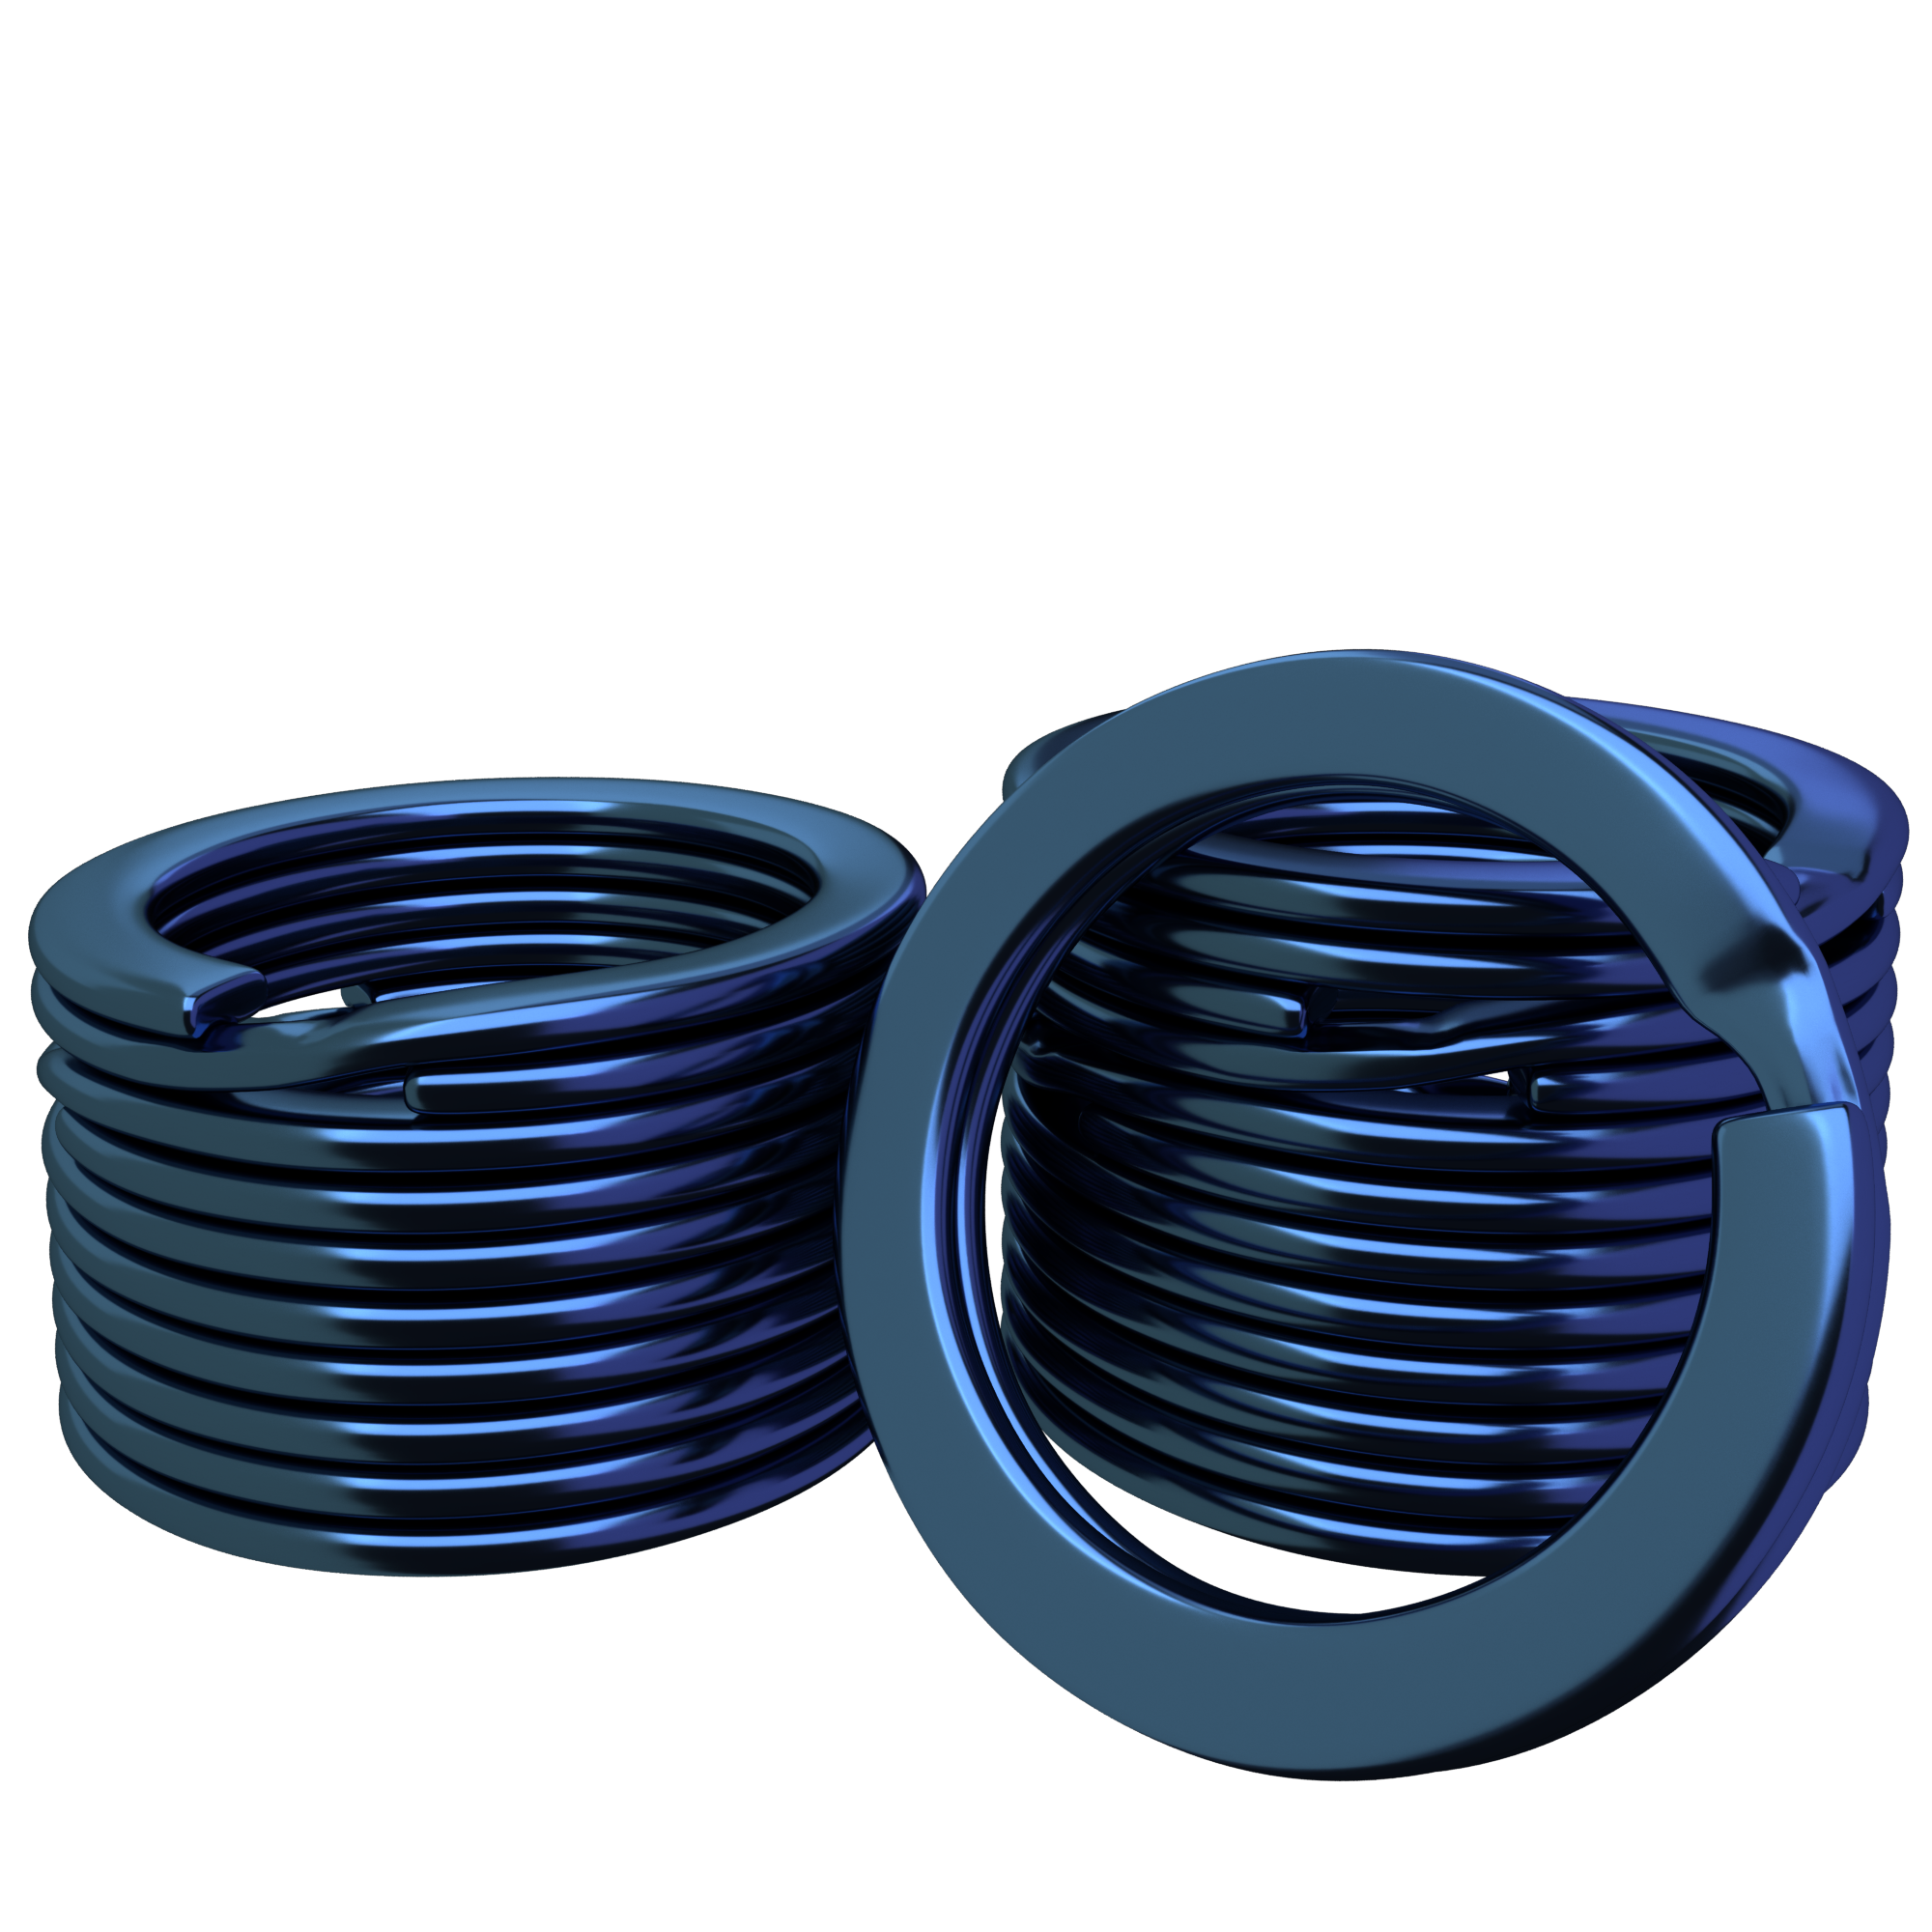 0.8" METAL SPLIT KEY RINGS PVD COATED(12PCS, NAVY BLUE COLOR)